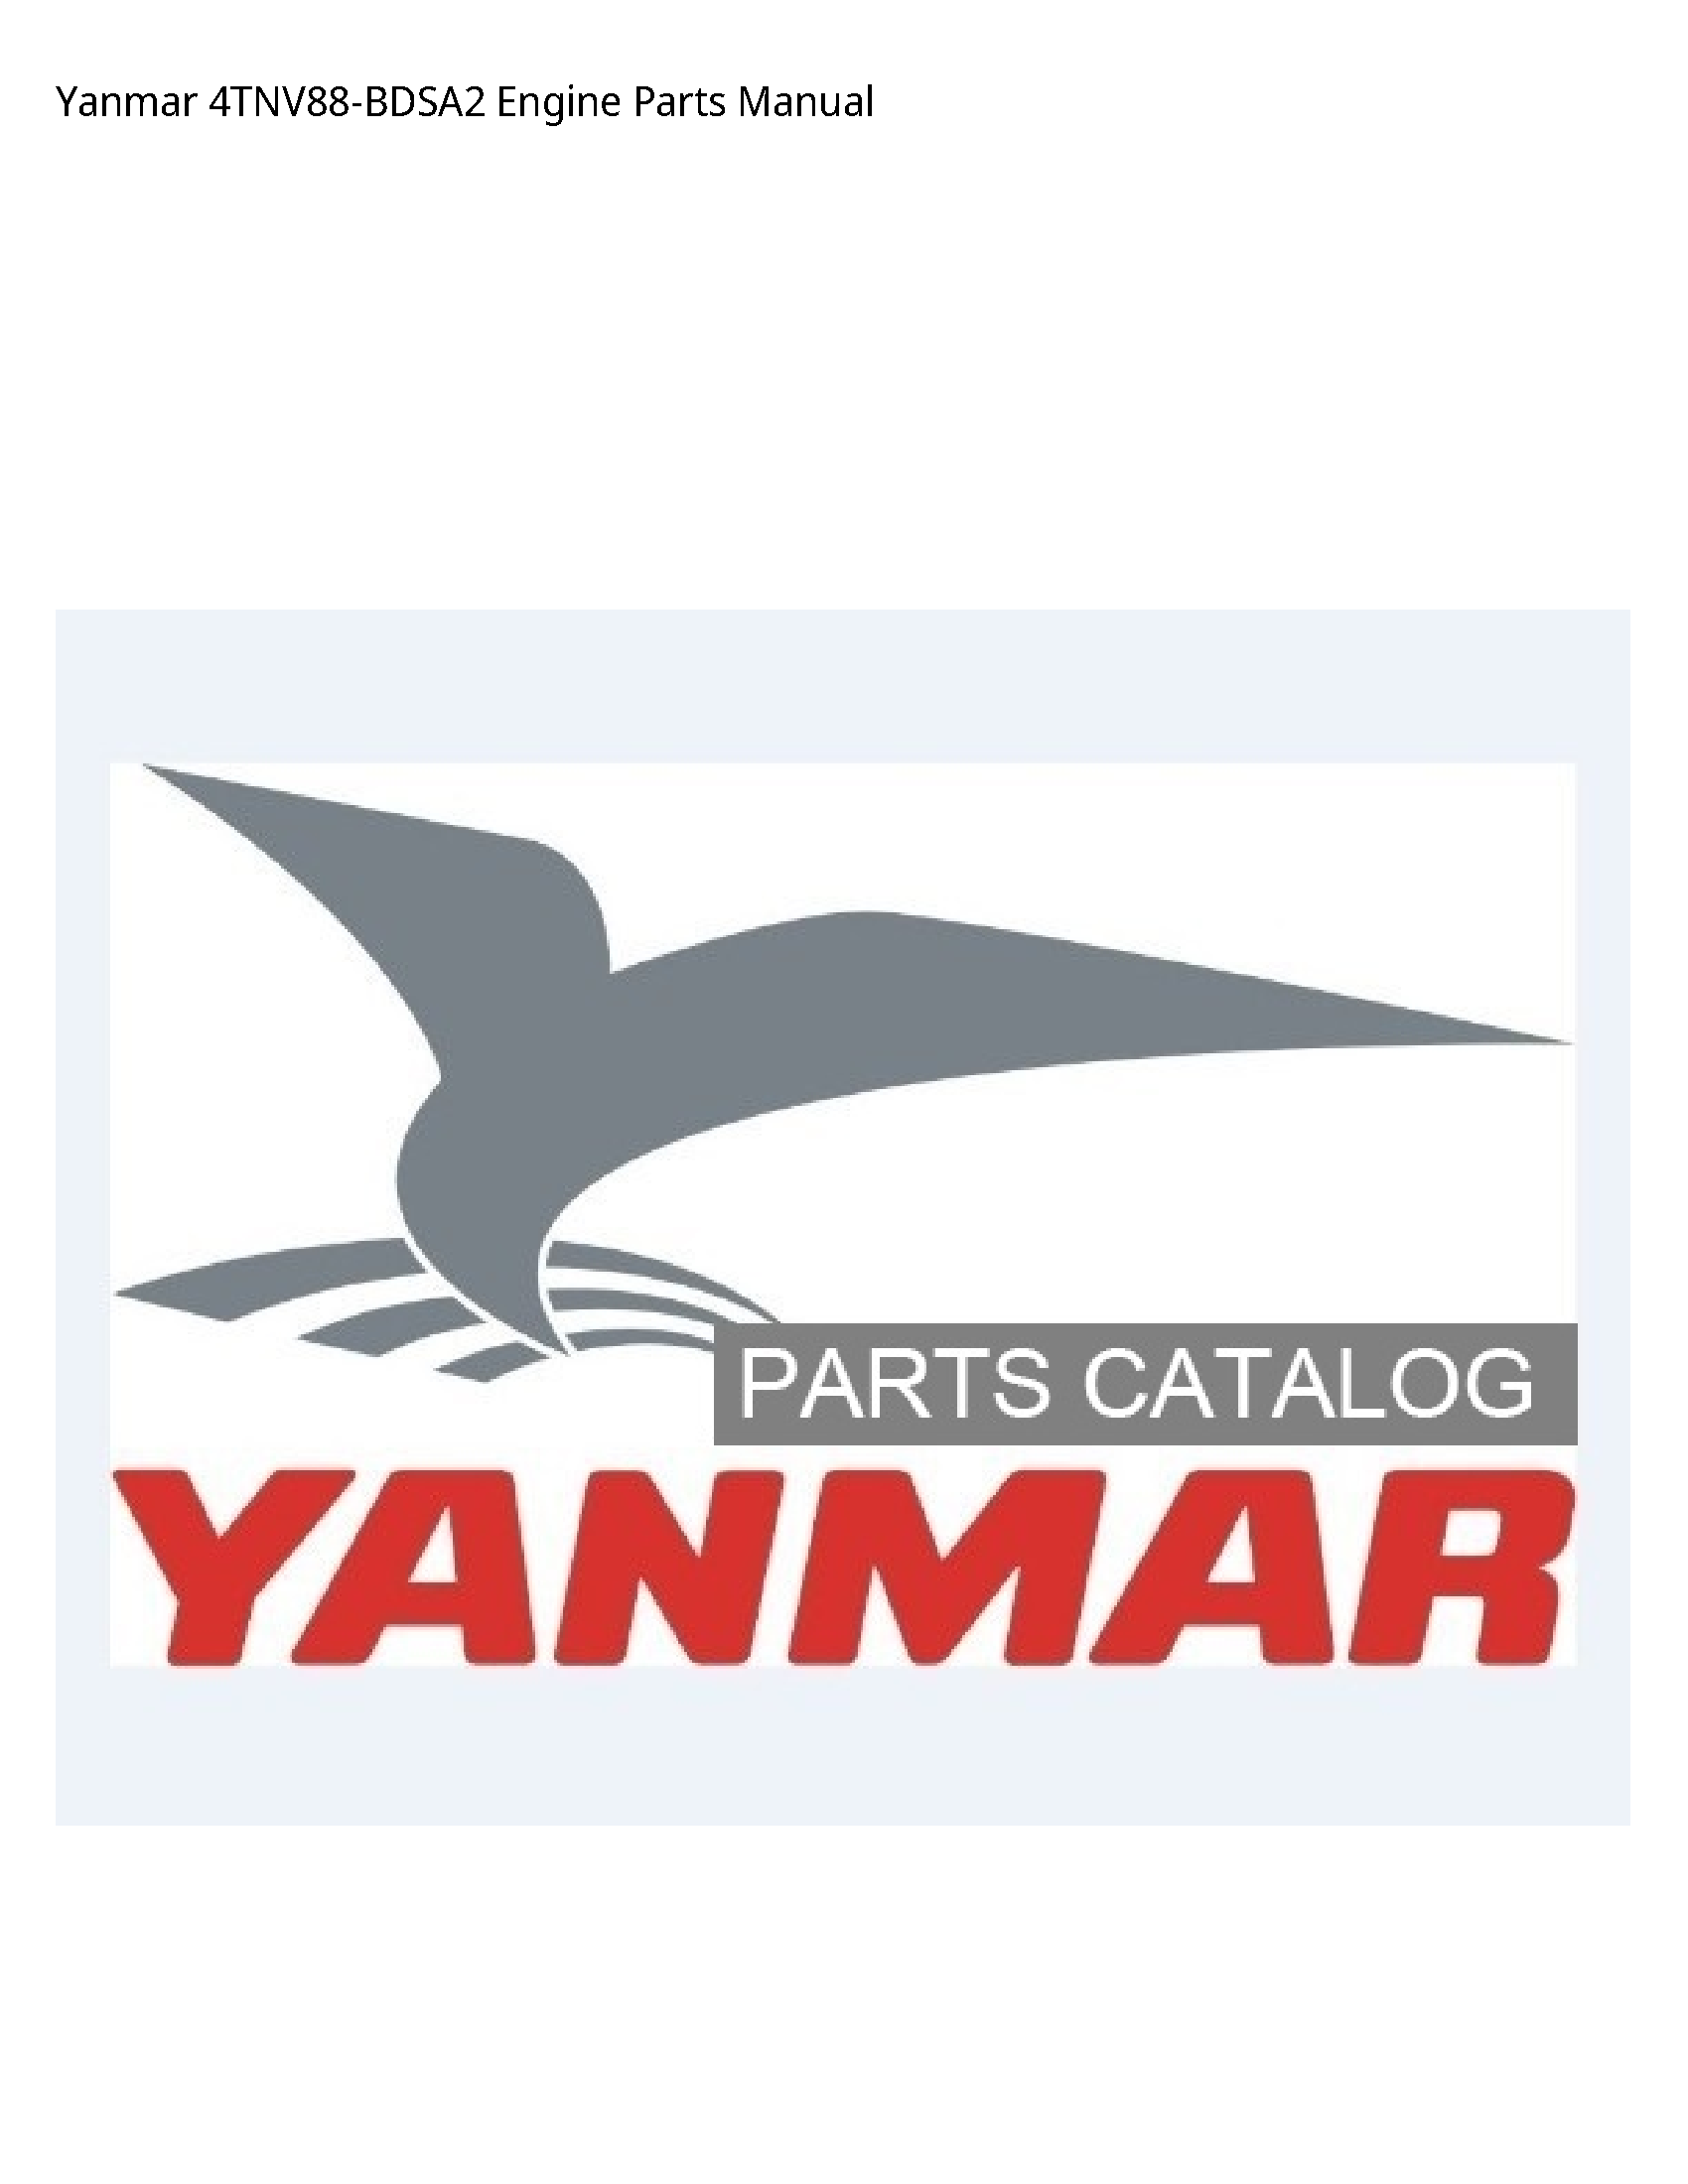 Yanmar 4TNV88-BDSA2 Engine Parts manual